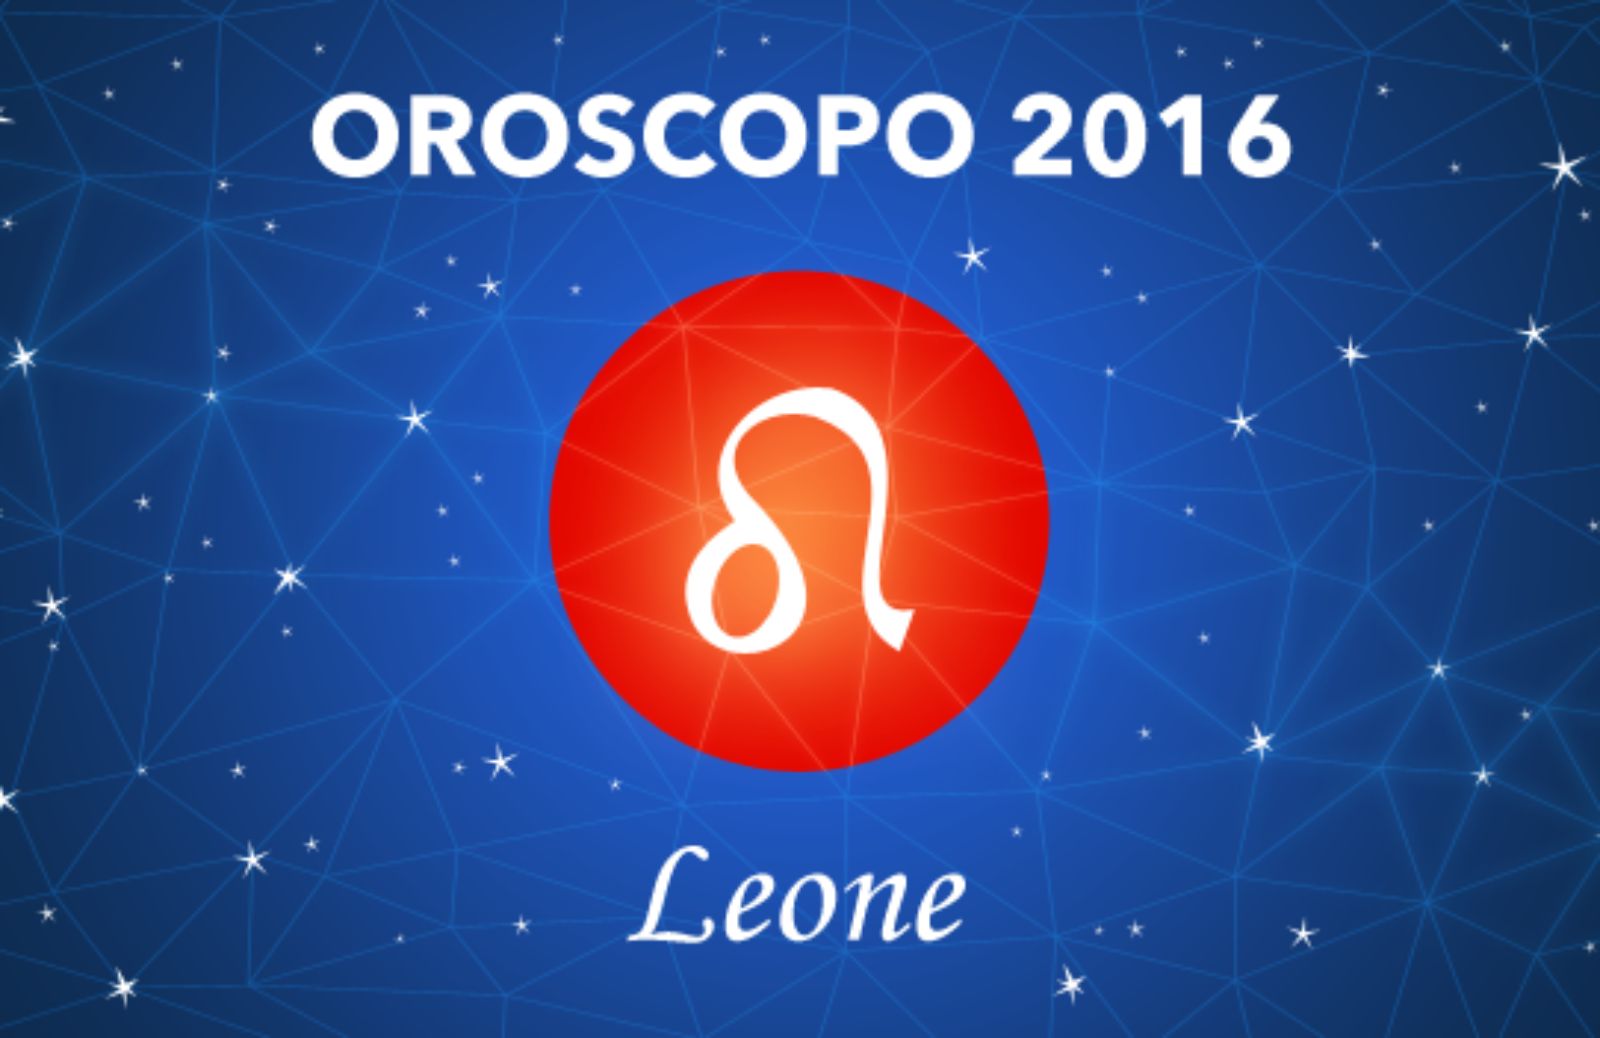 Oroscopo 2016 - Leone